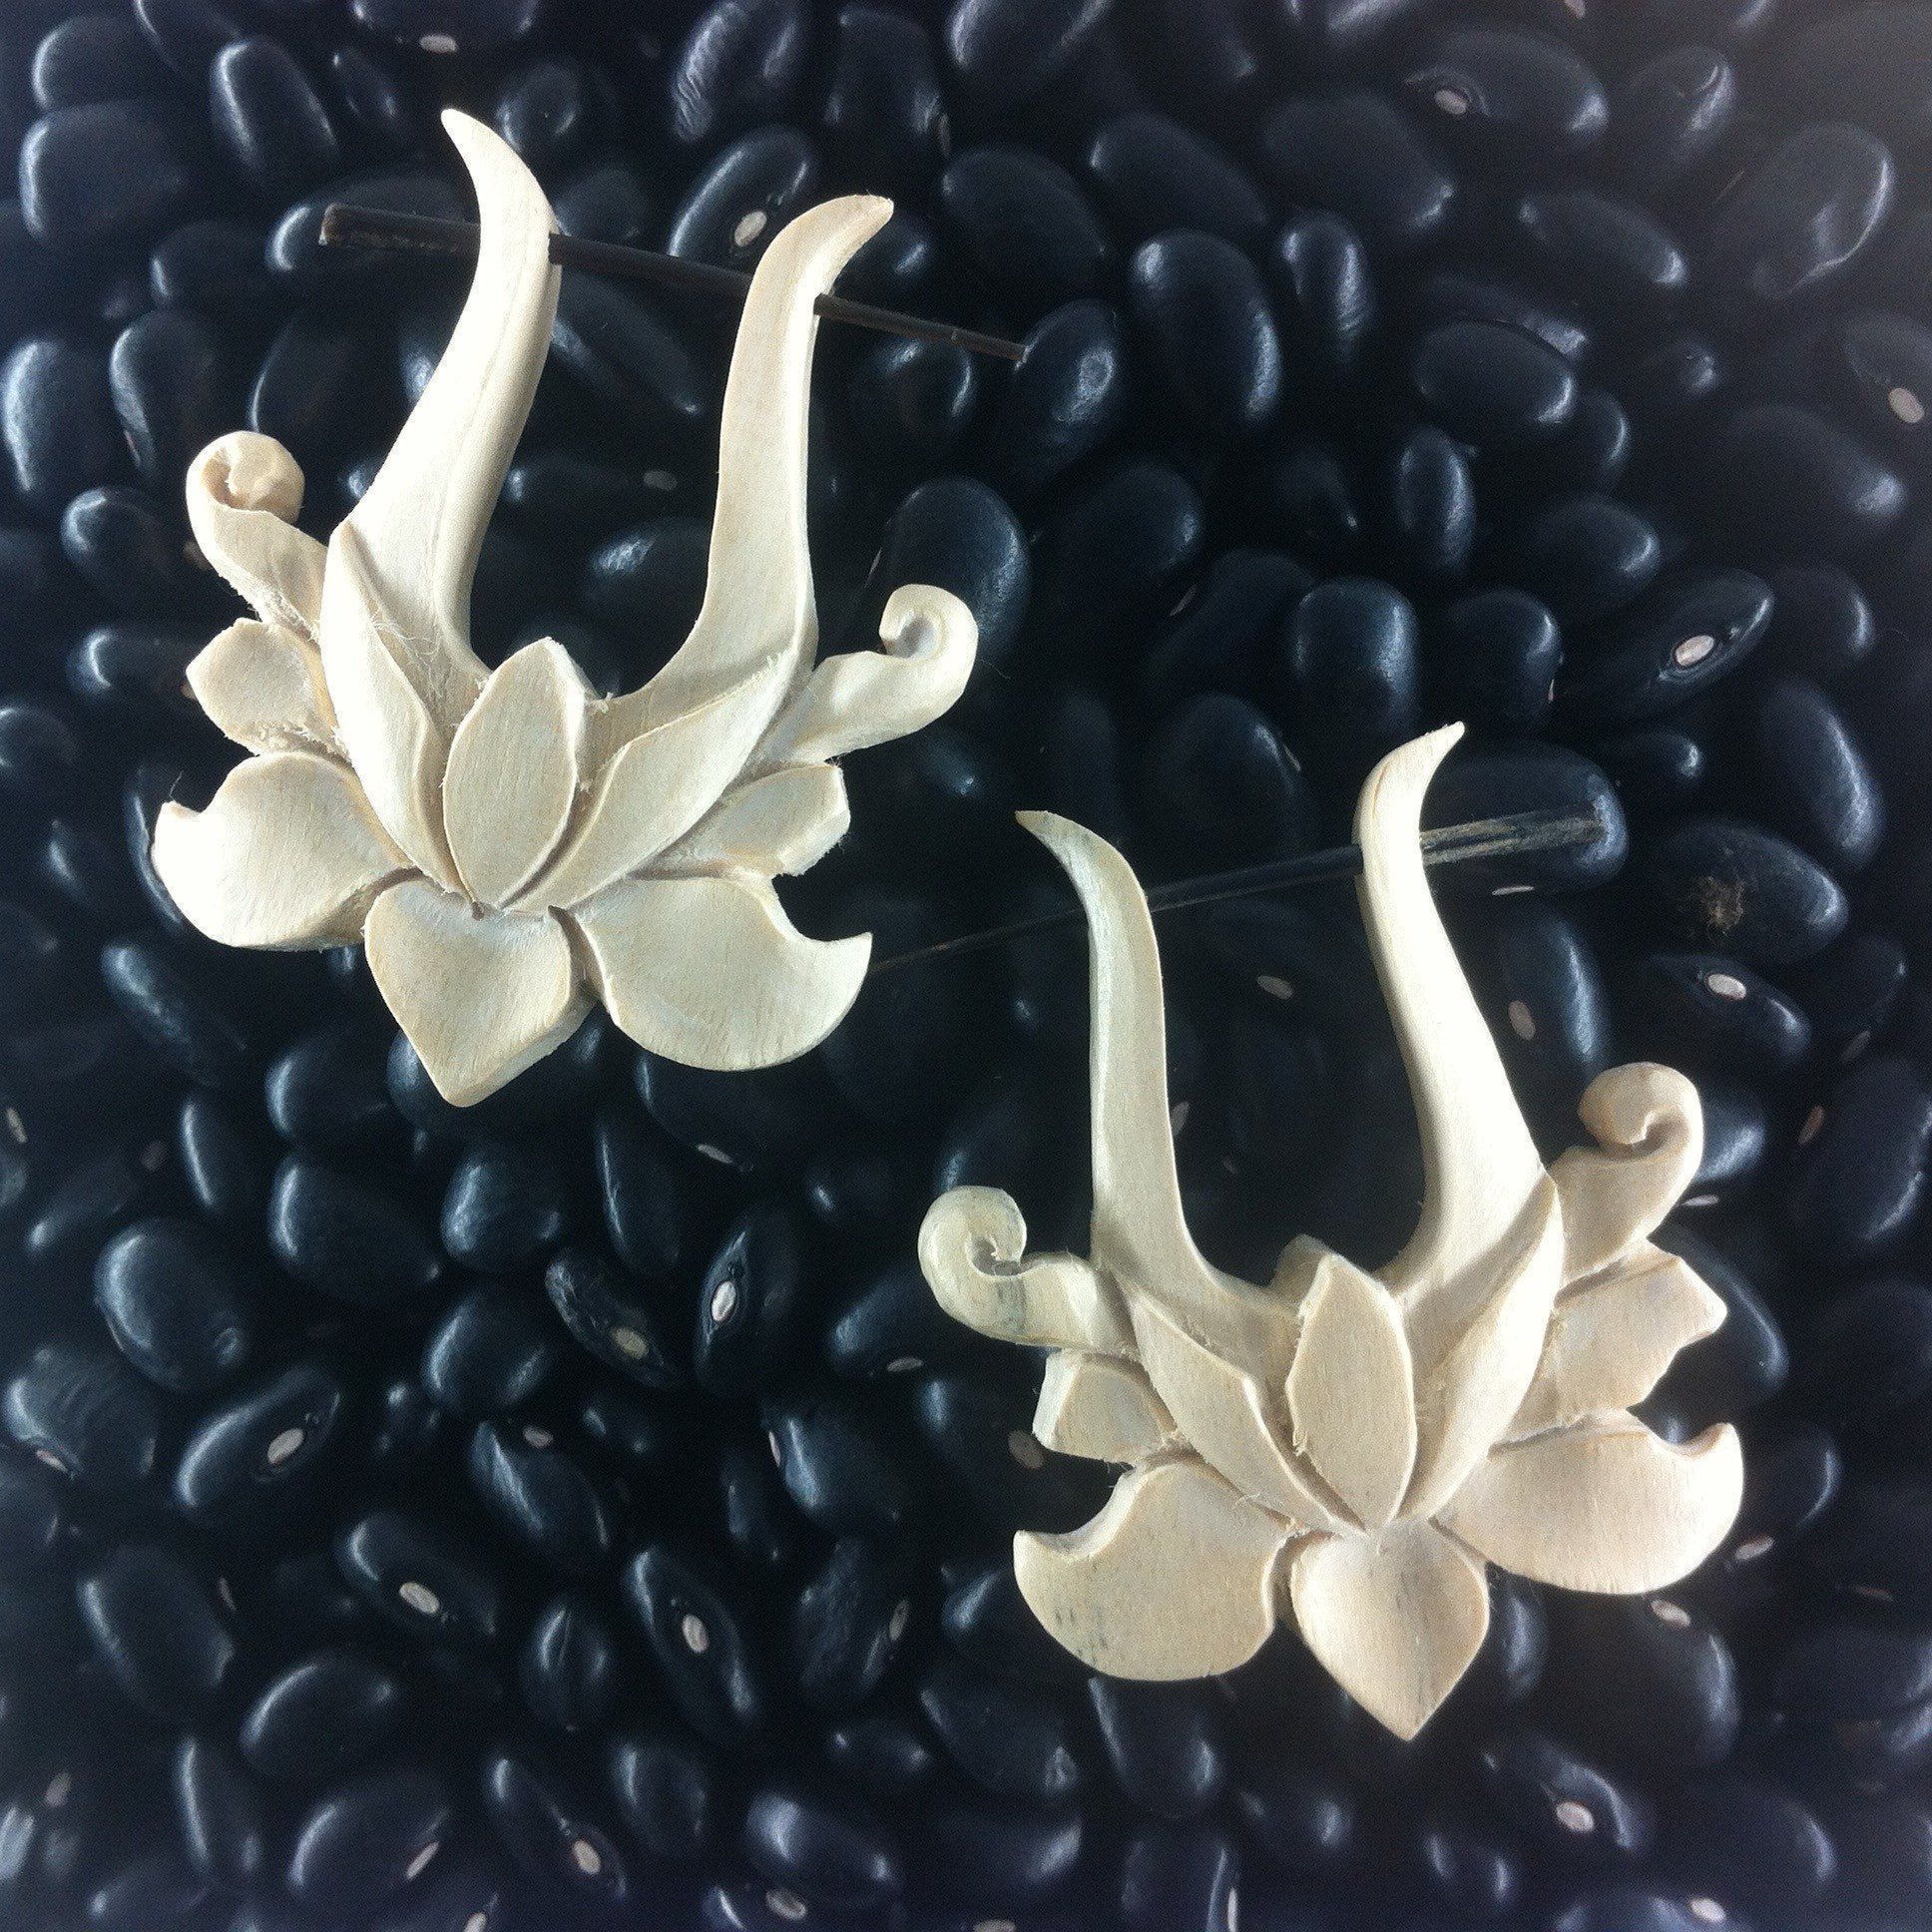 Natural Jewelry :|: Lotus Rose. Light Wood Earrings, 1 1/2 inch W x 1 1/2 inch L. | Wood Earrings